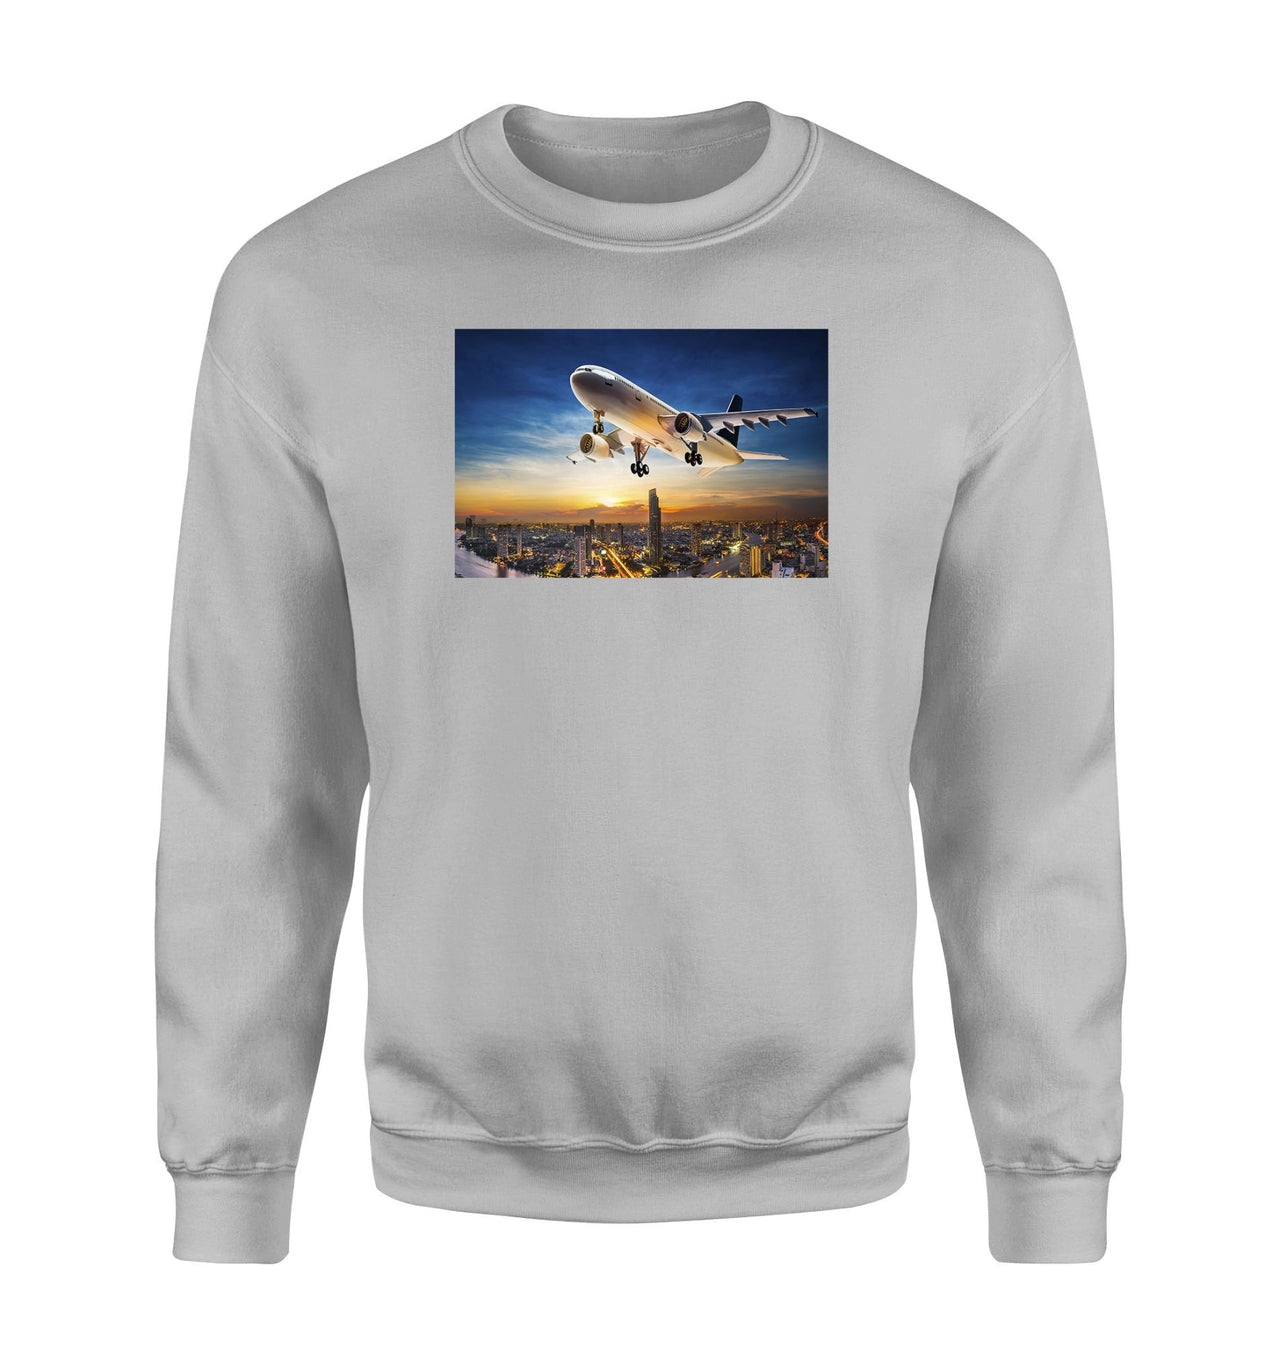 Super Aircraft over City at Sunset Designed Sweatshirts